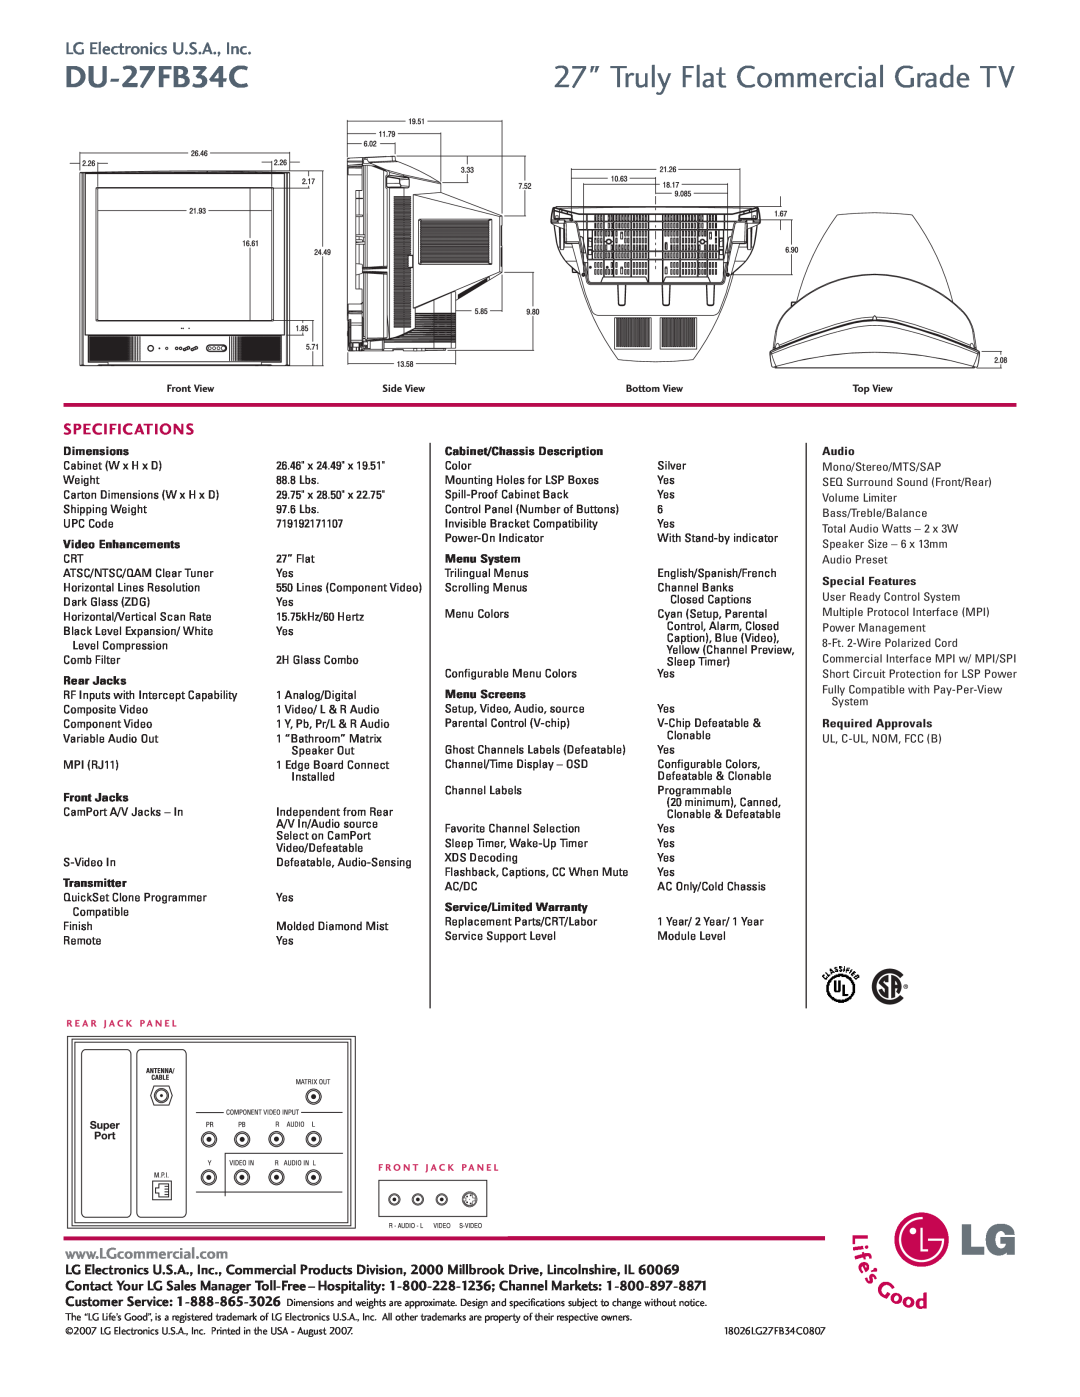 LG Electronics DU-27FB34C manual Truly Flat Commercial Grade TV, LG Electronics U.S.A., Inc, Specifications 